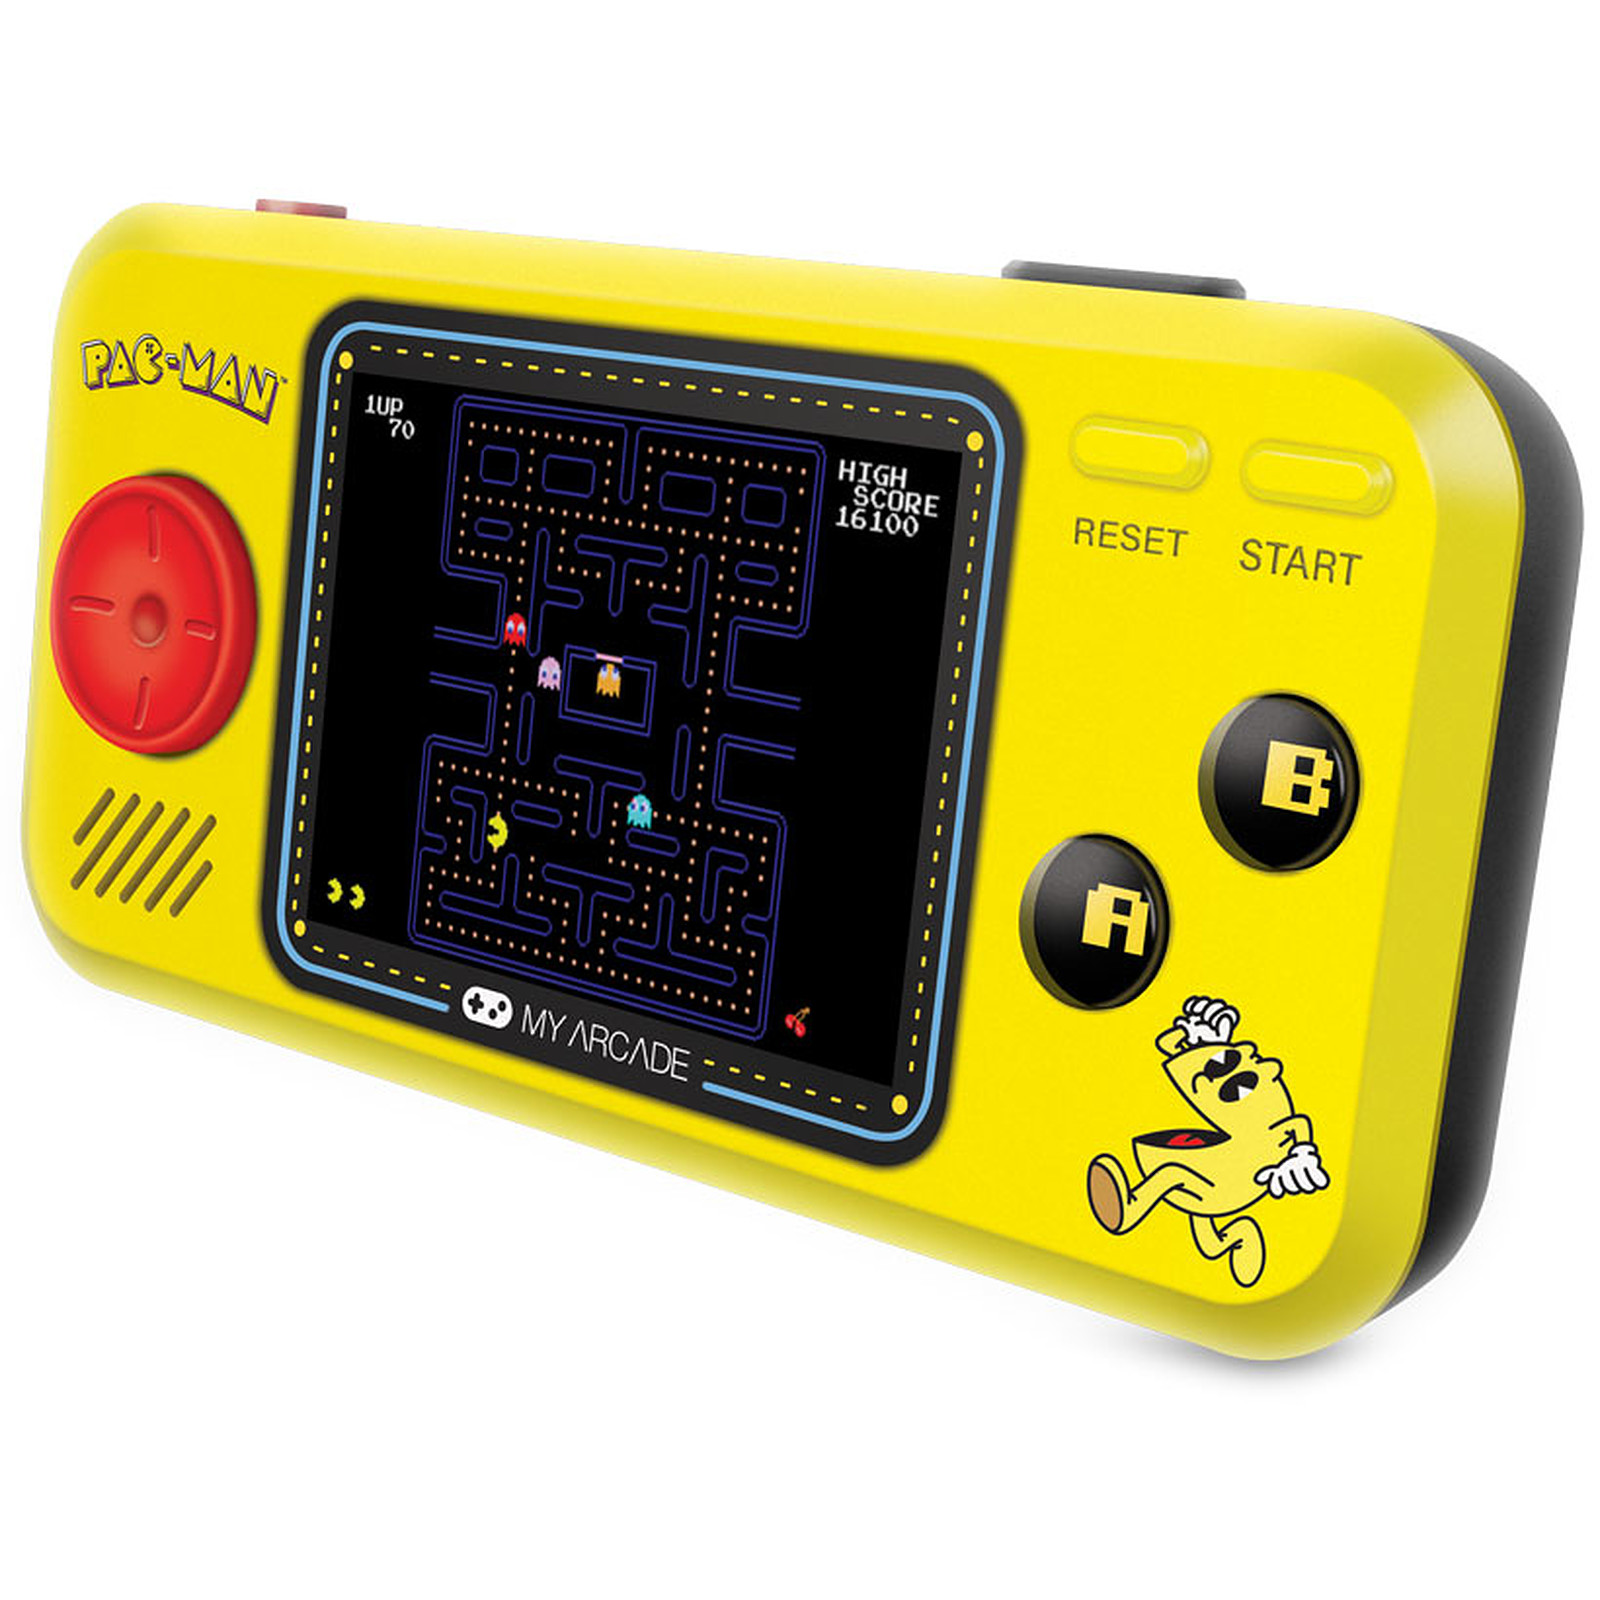 My Arcade PAC-MAN Pocket Player - Console retrogaming My Arcade